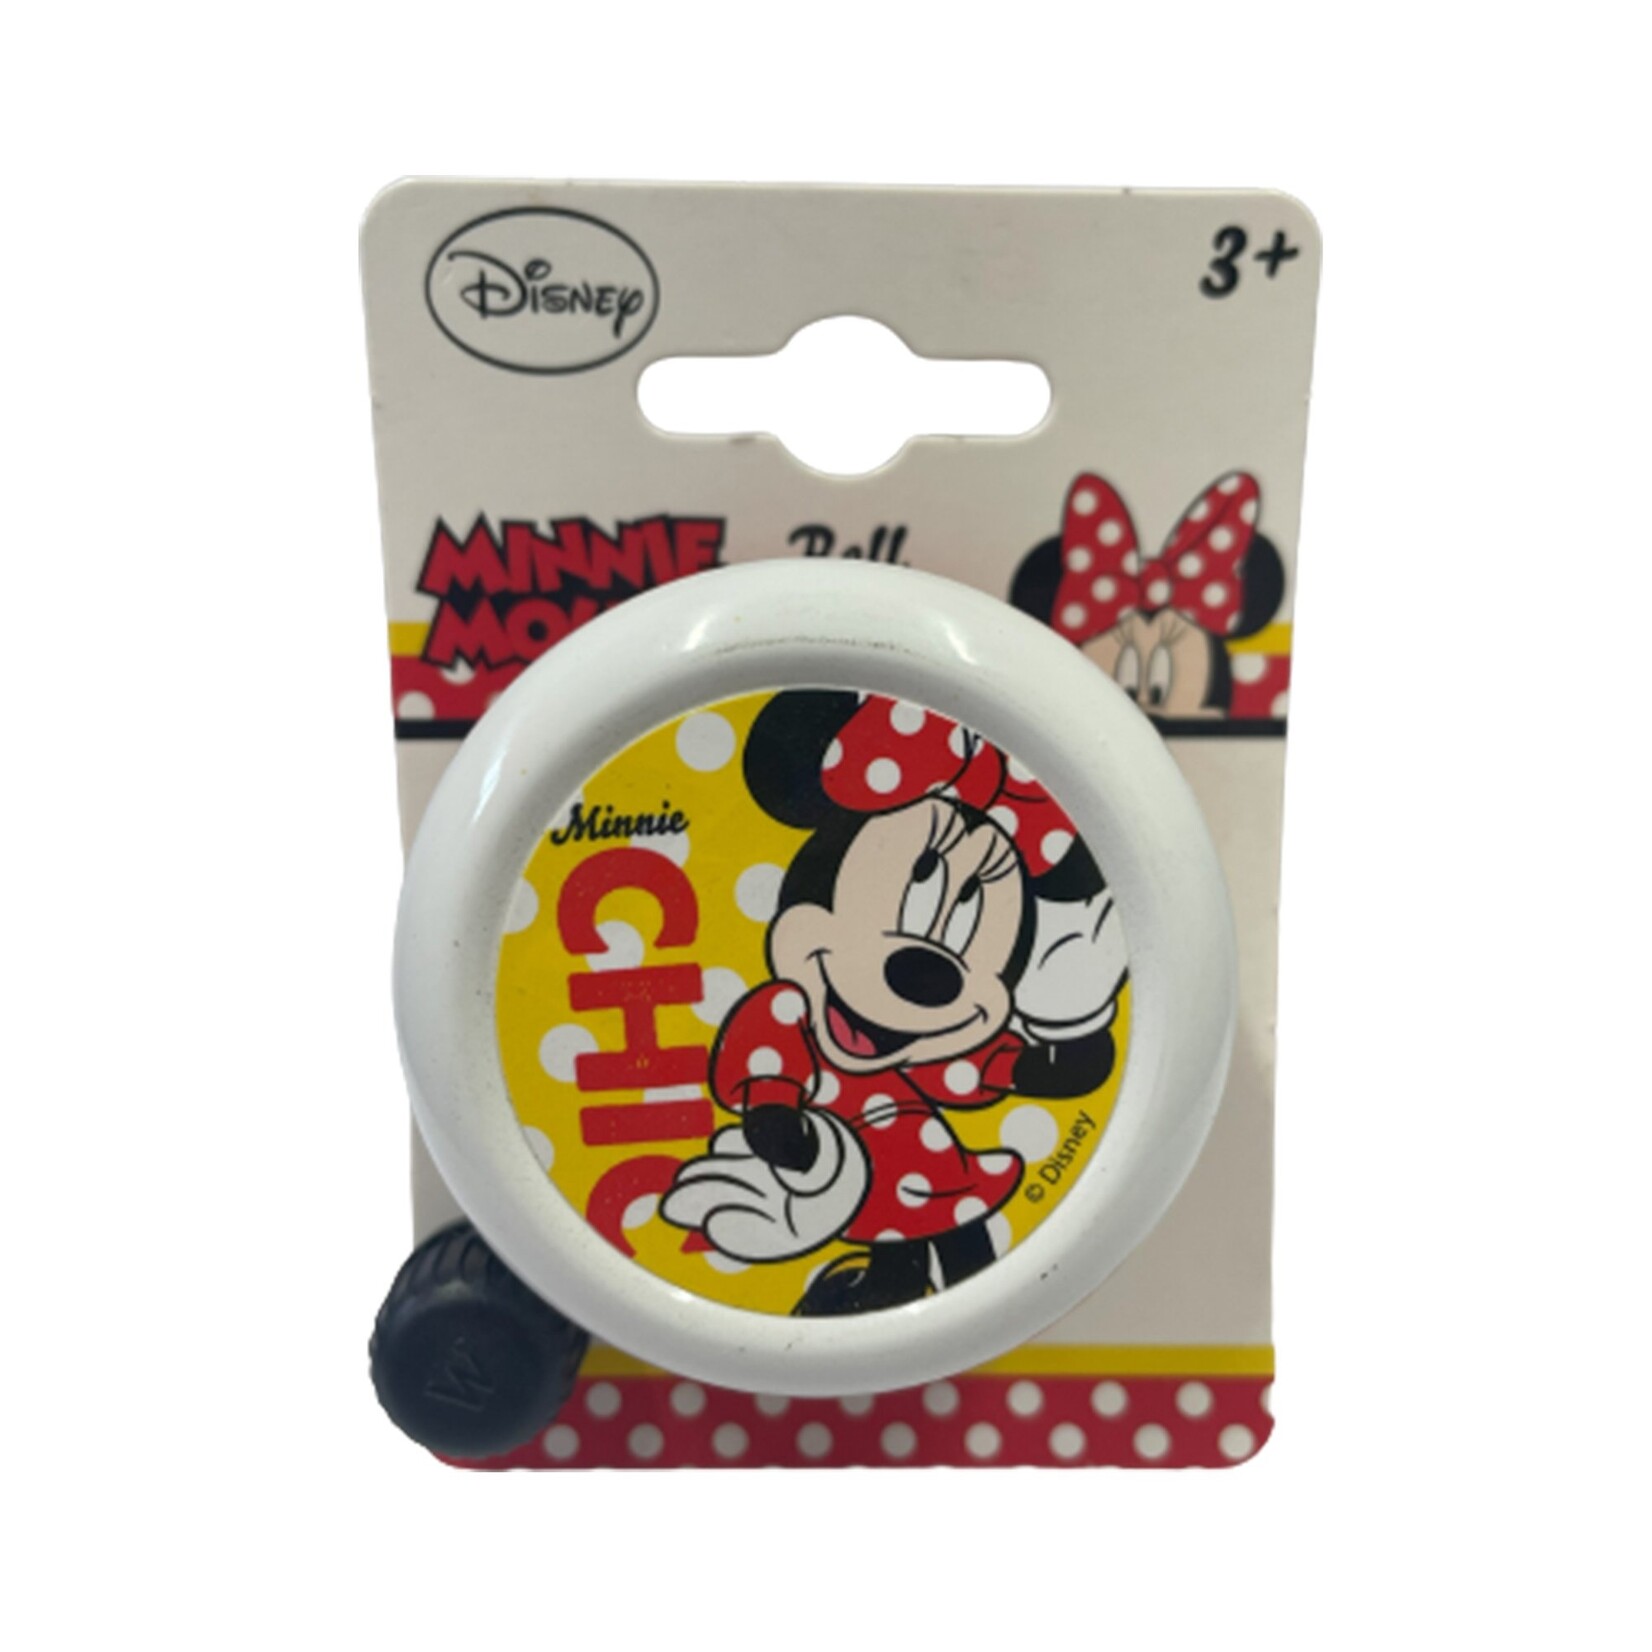 WIDEK Disney Minnie Mouse Bell